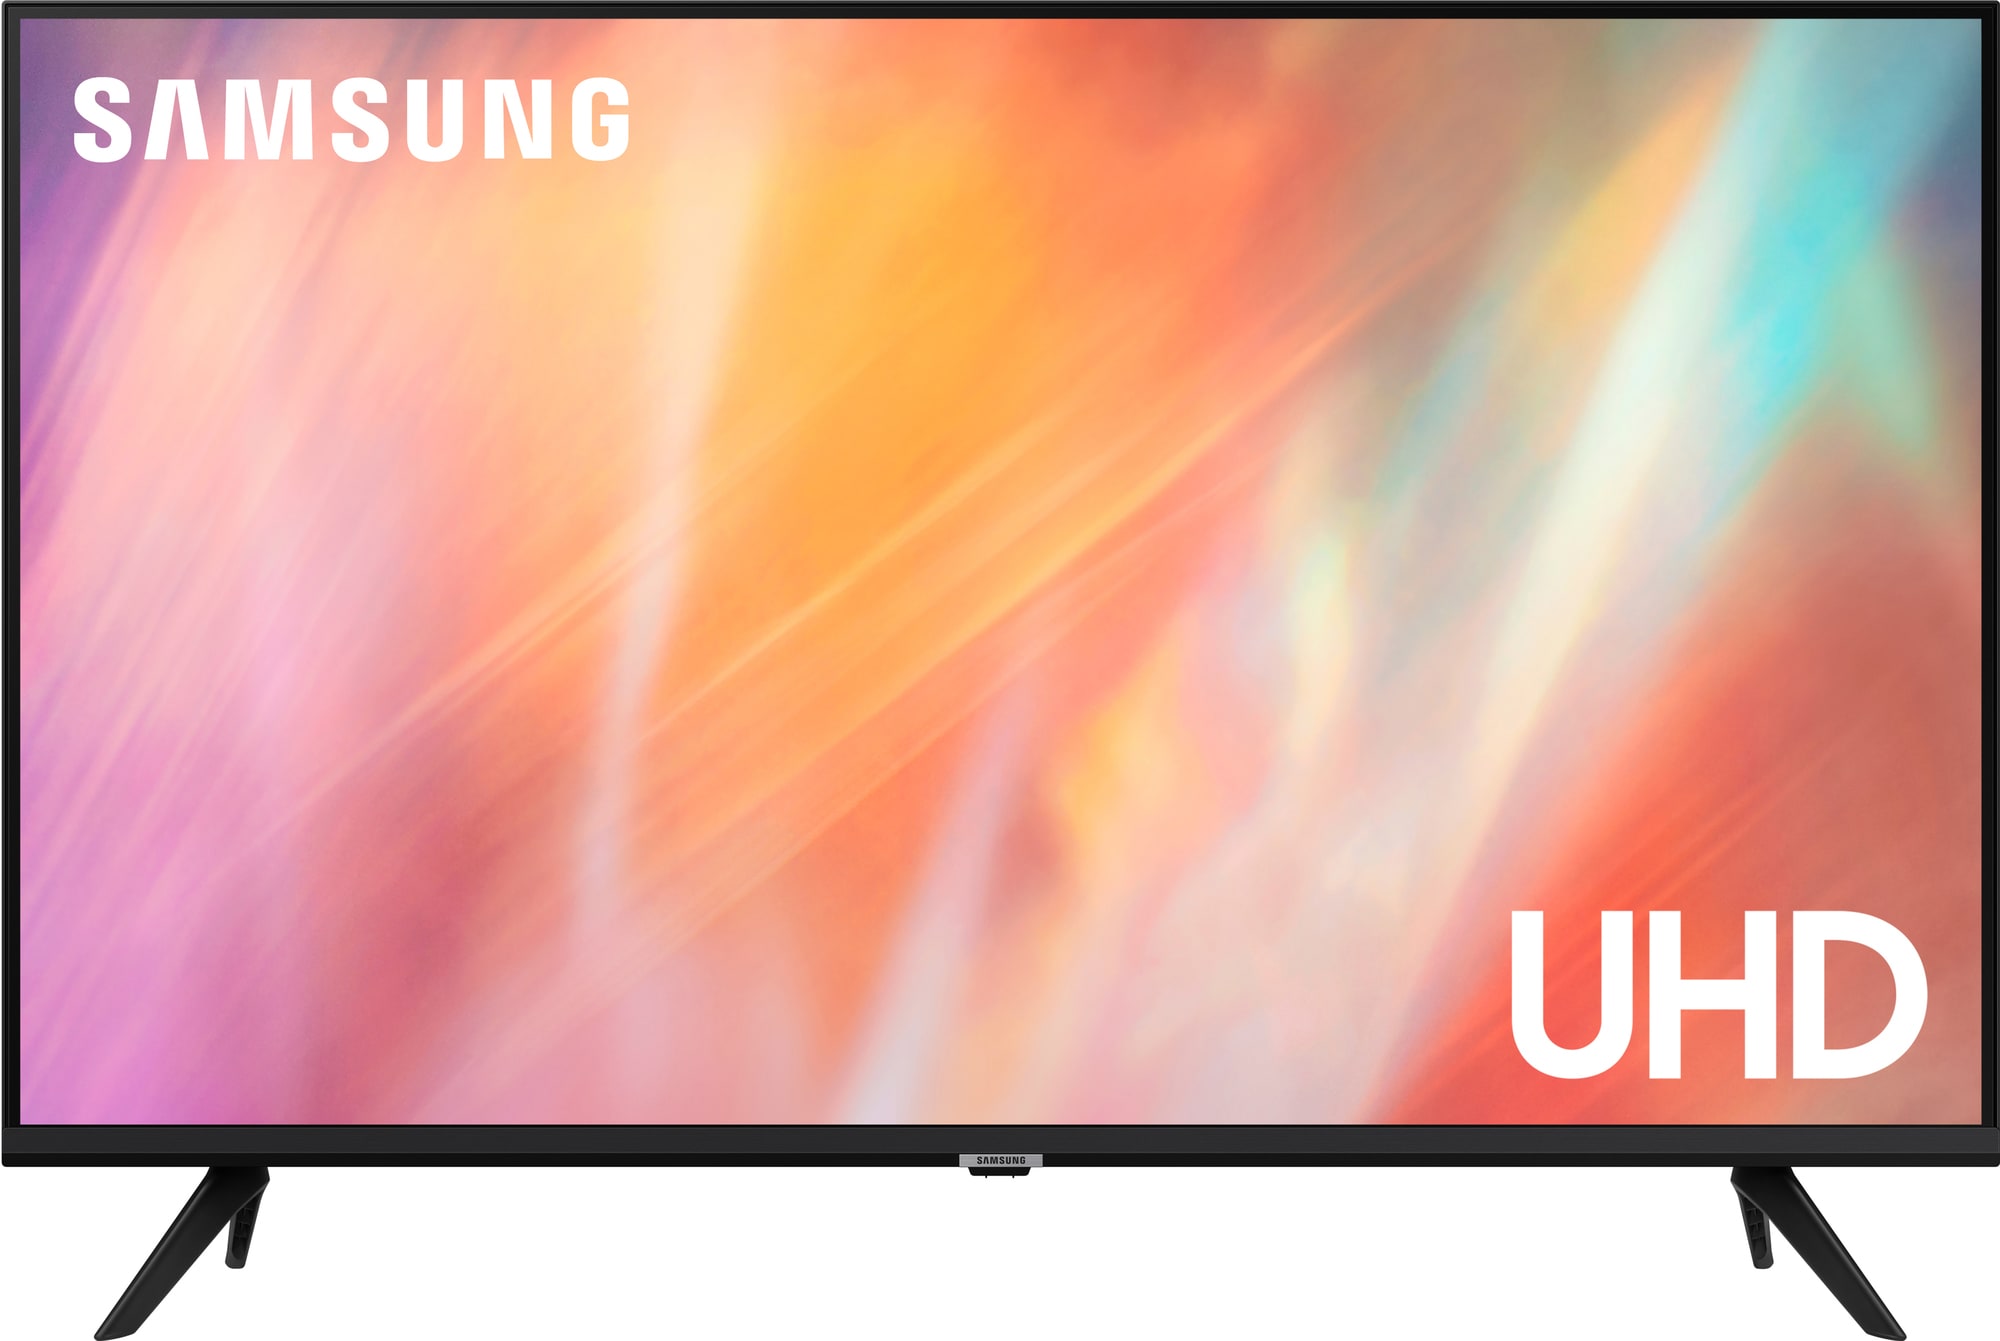 Samsung TV - Elgiganten